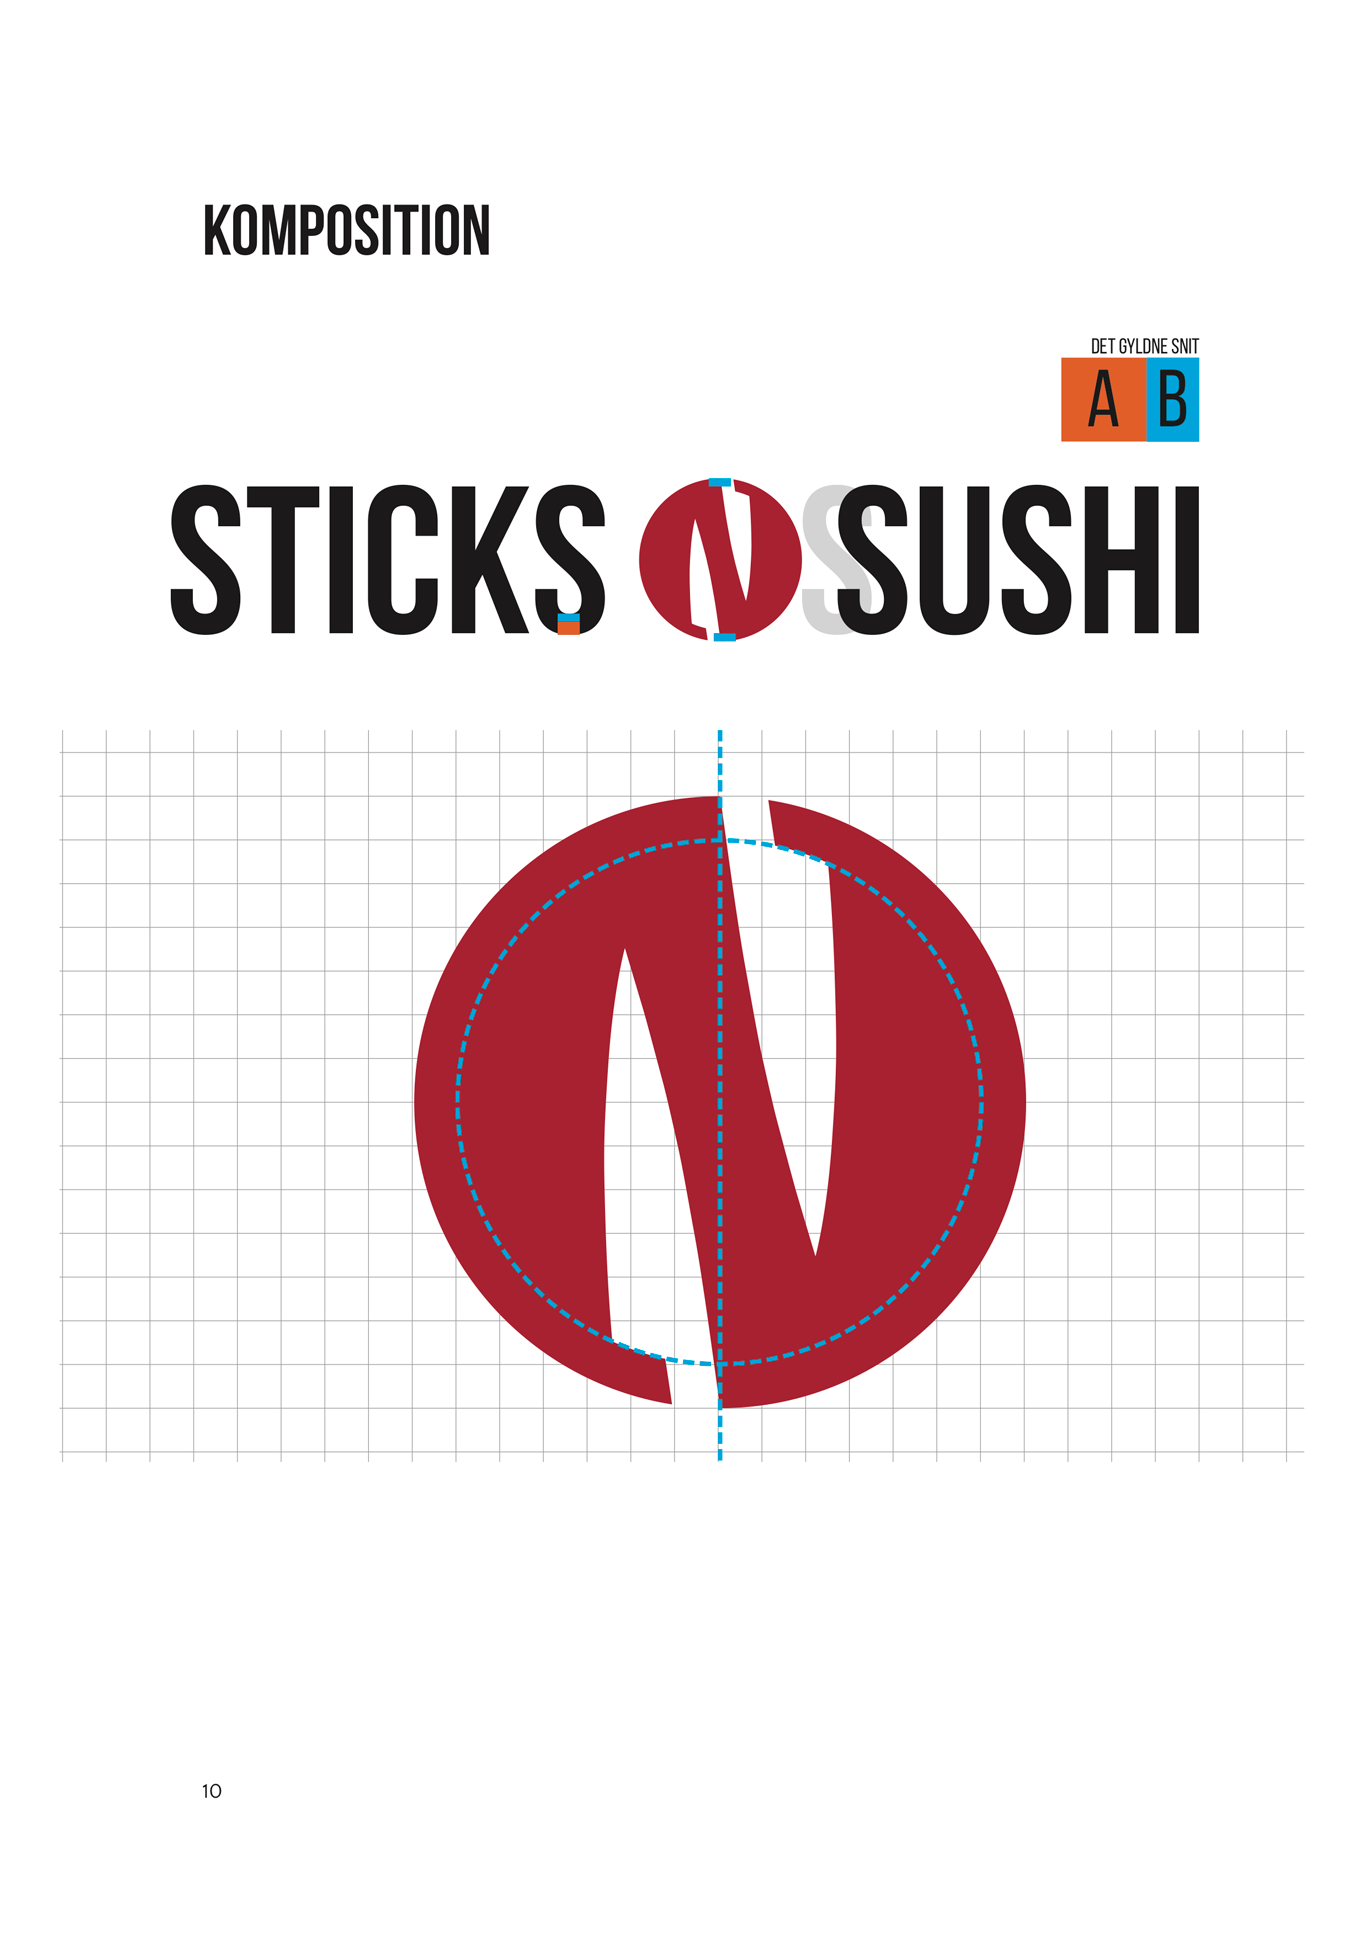 sticks-n-sushi-komposition